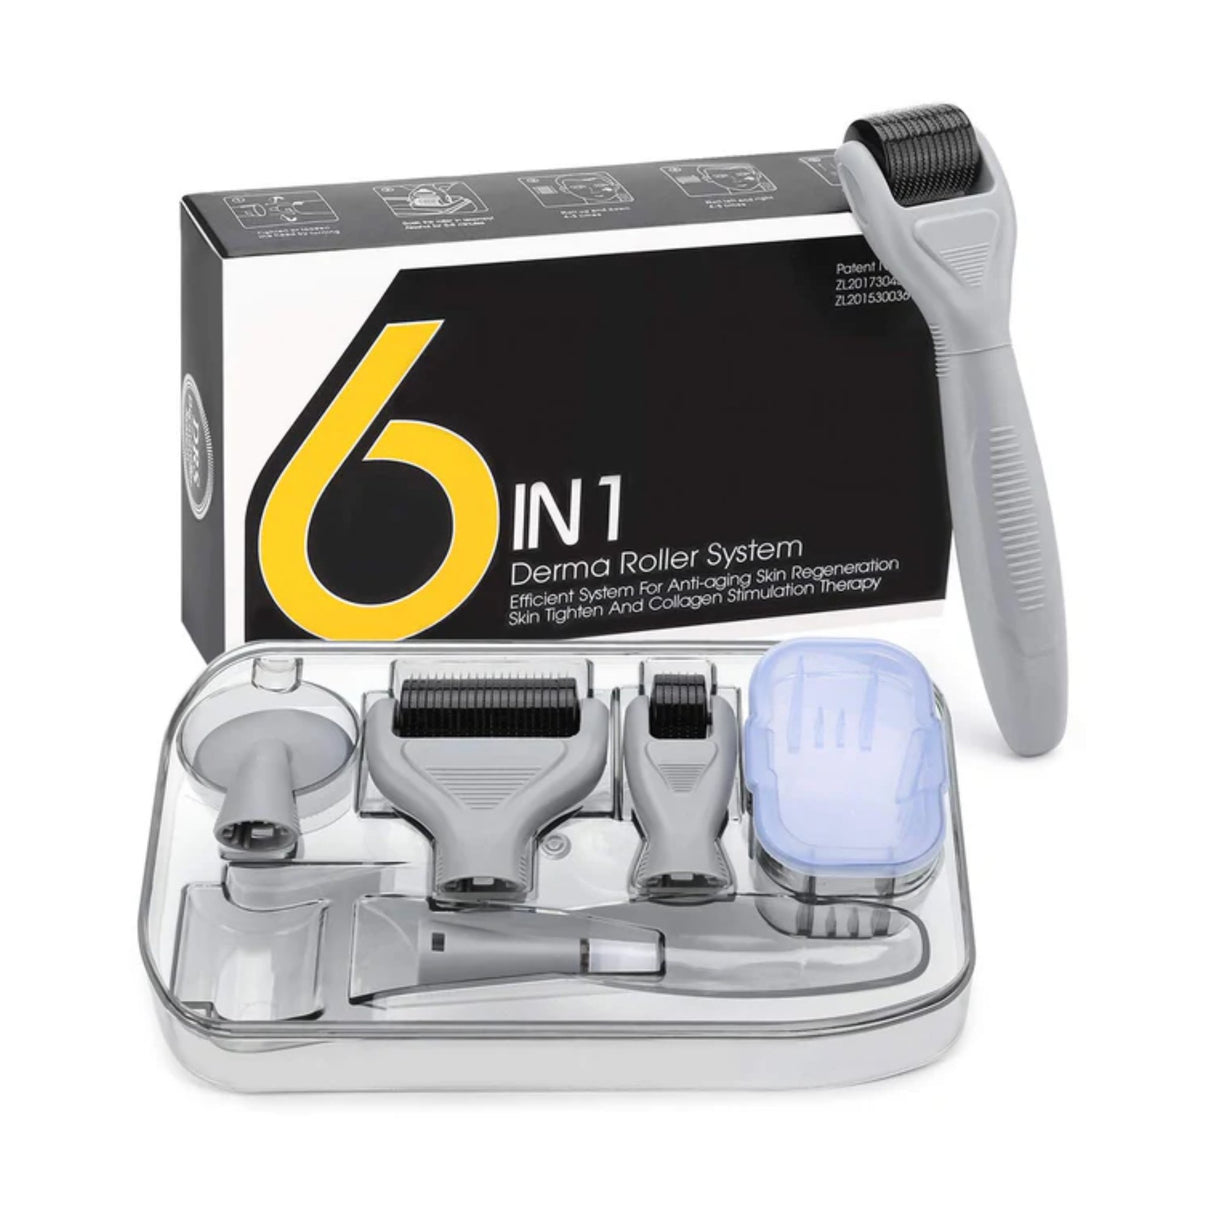 Derma Roller 6 in 1 Kit 720 Microneedles - Filler Lux™ - Medical Device - Filler Lux